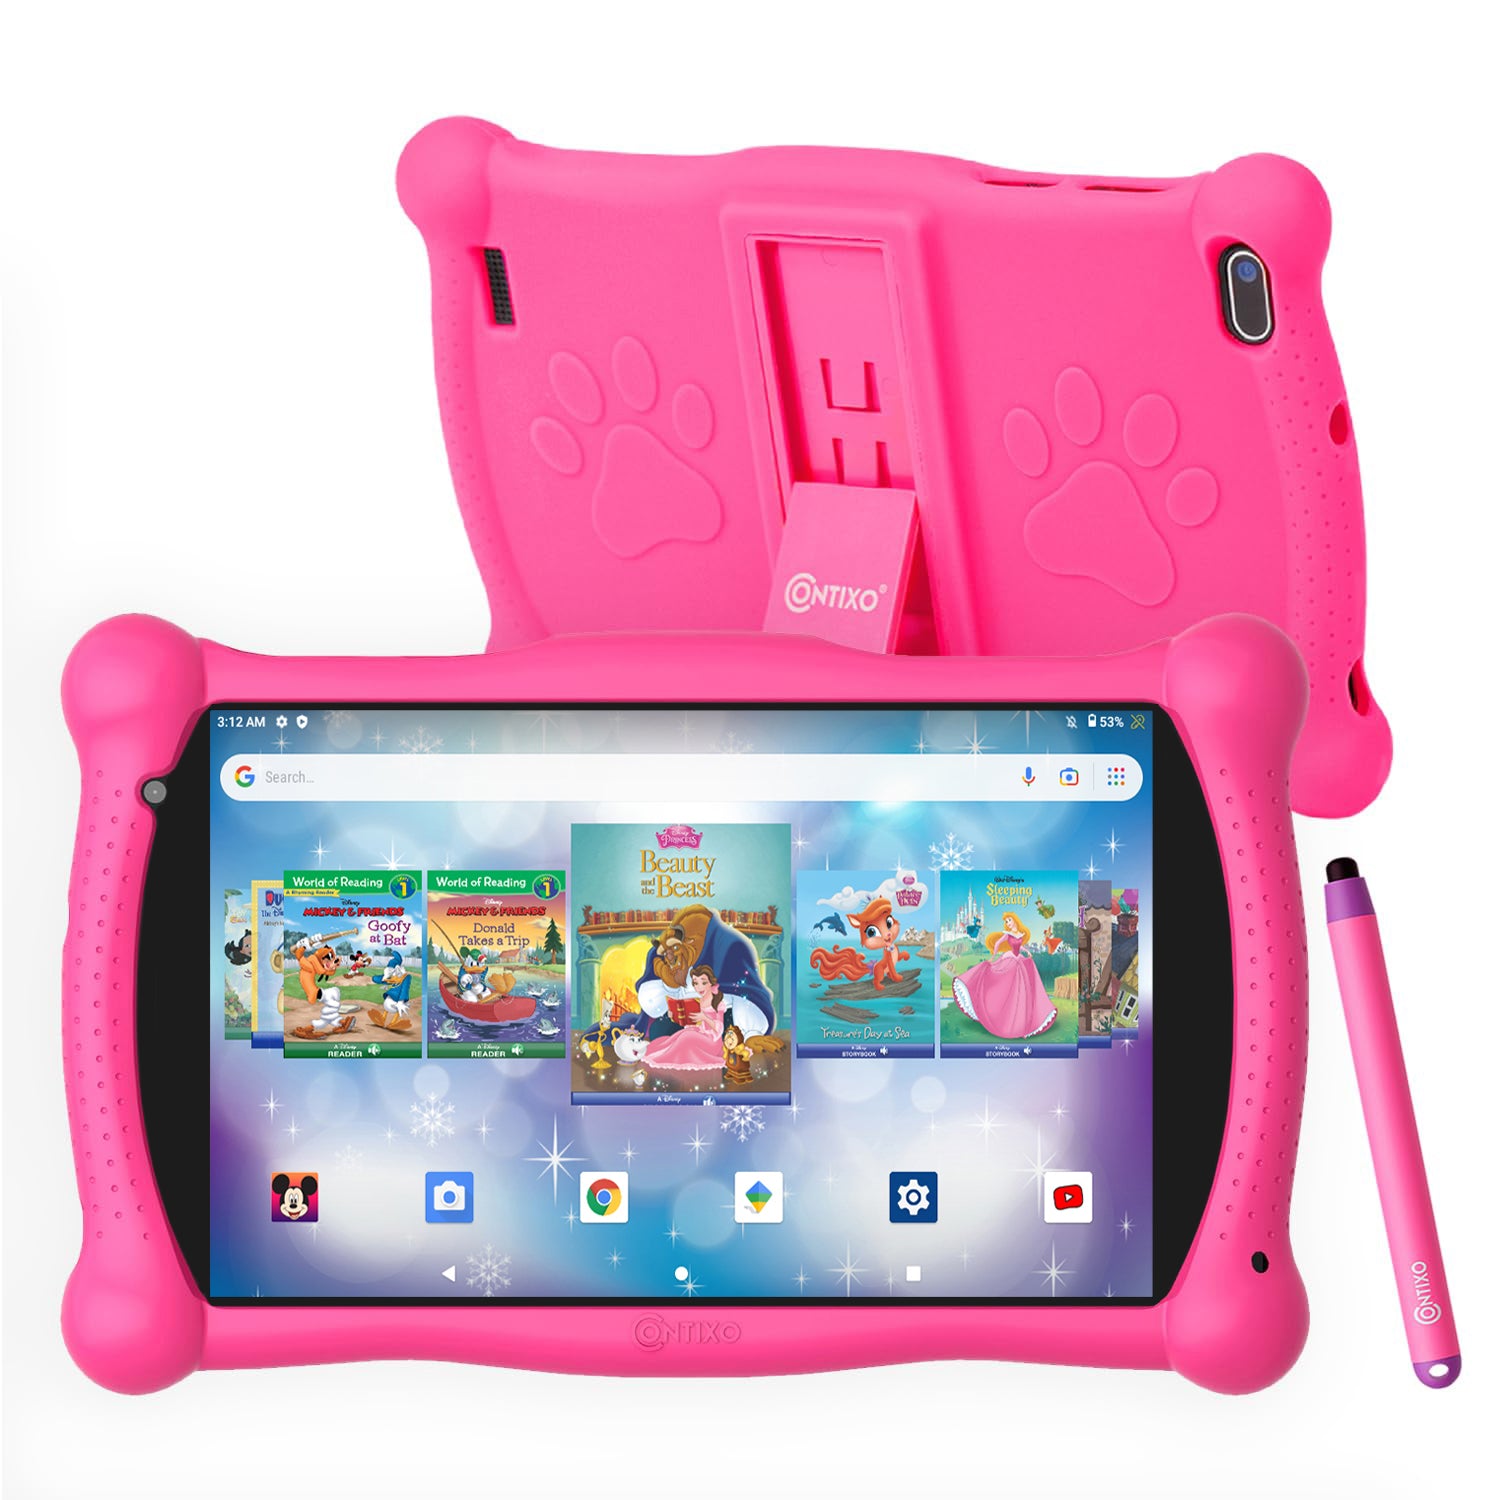 Contixo 7” V10 Kids Bluetooth 32GB Tablet featuring with 50 Disney E-books